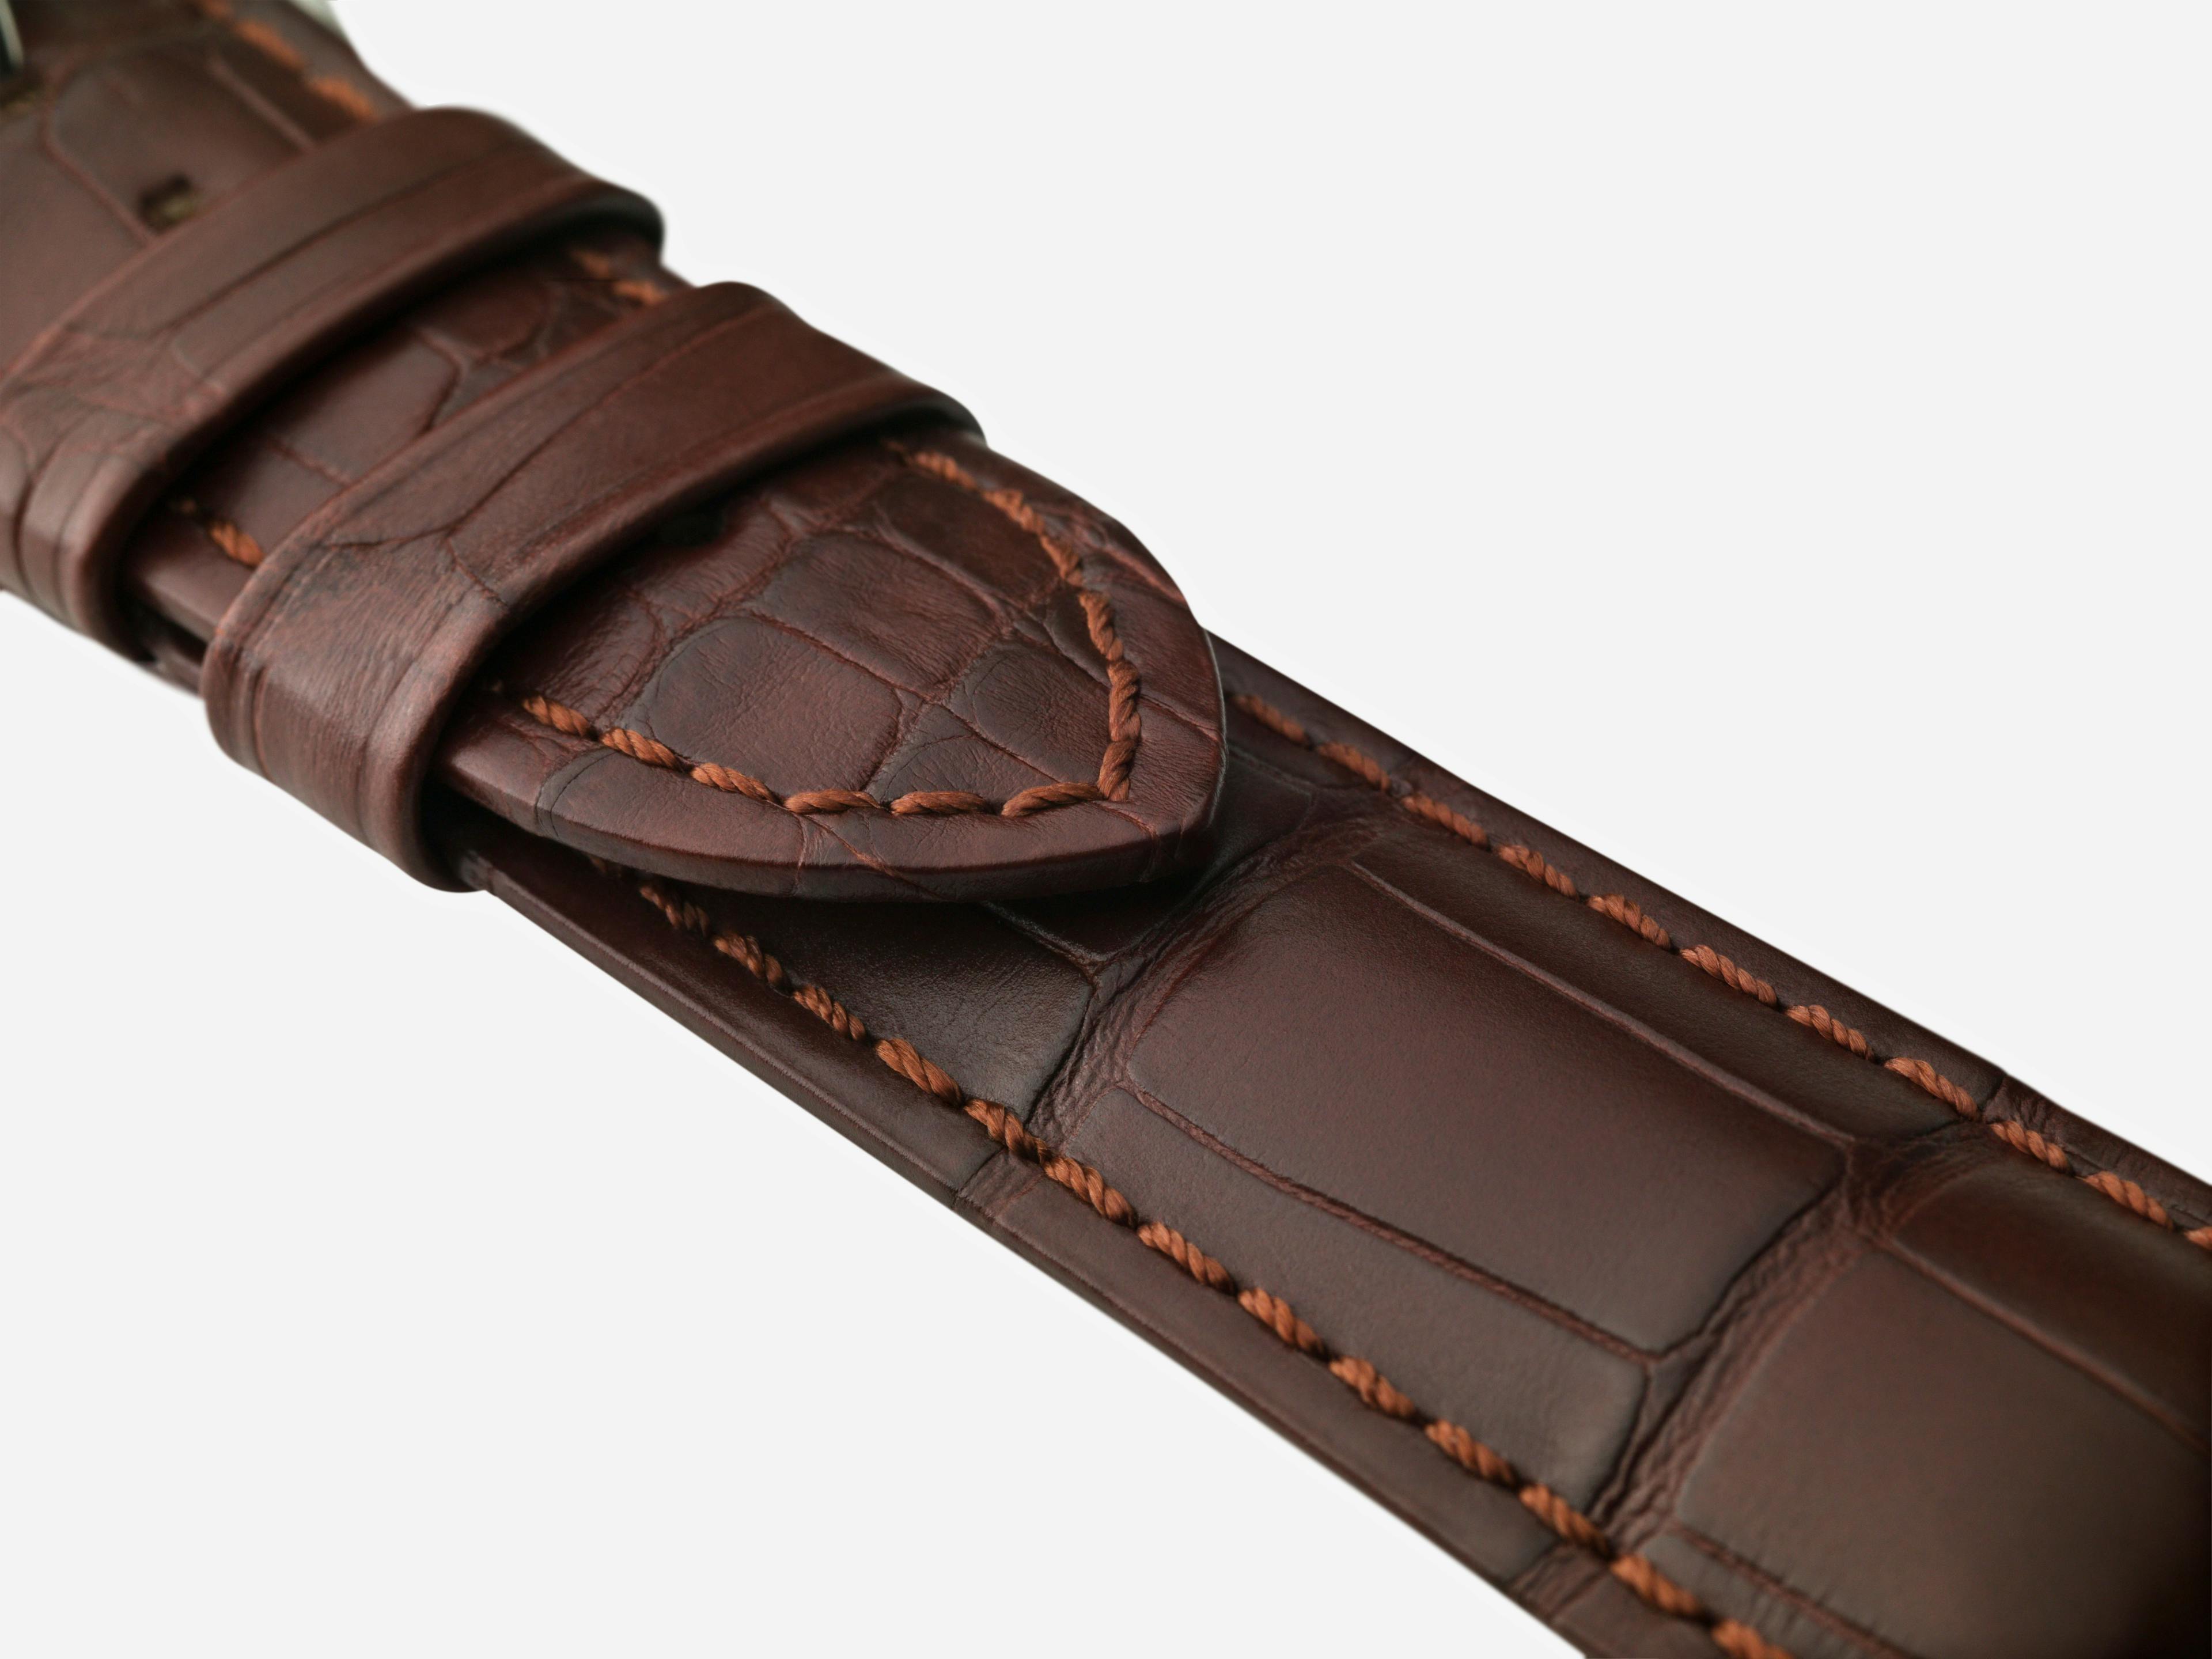 20mm Brown alligator leather strap